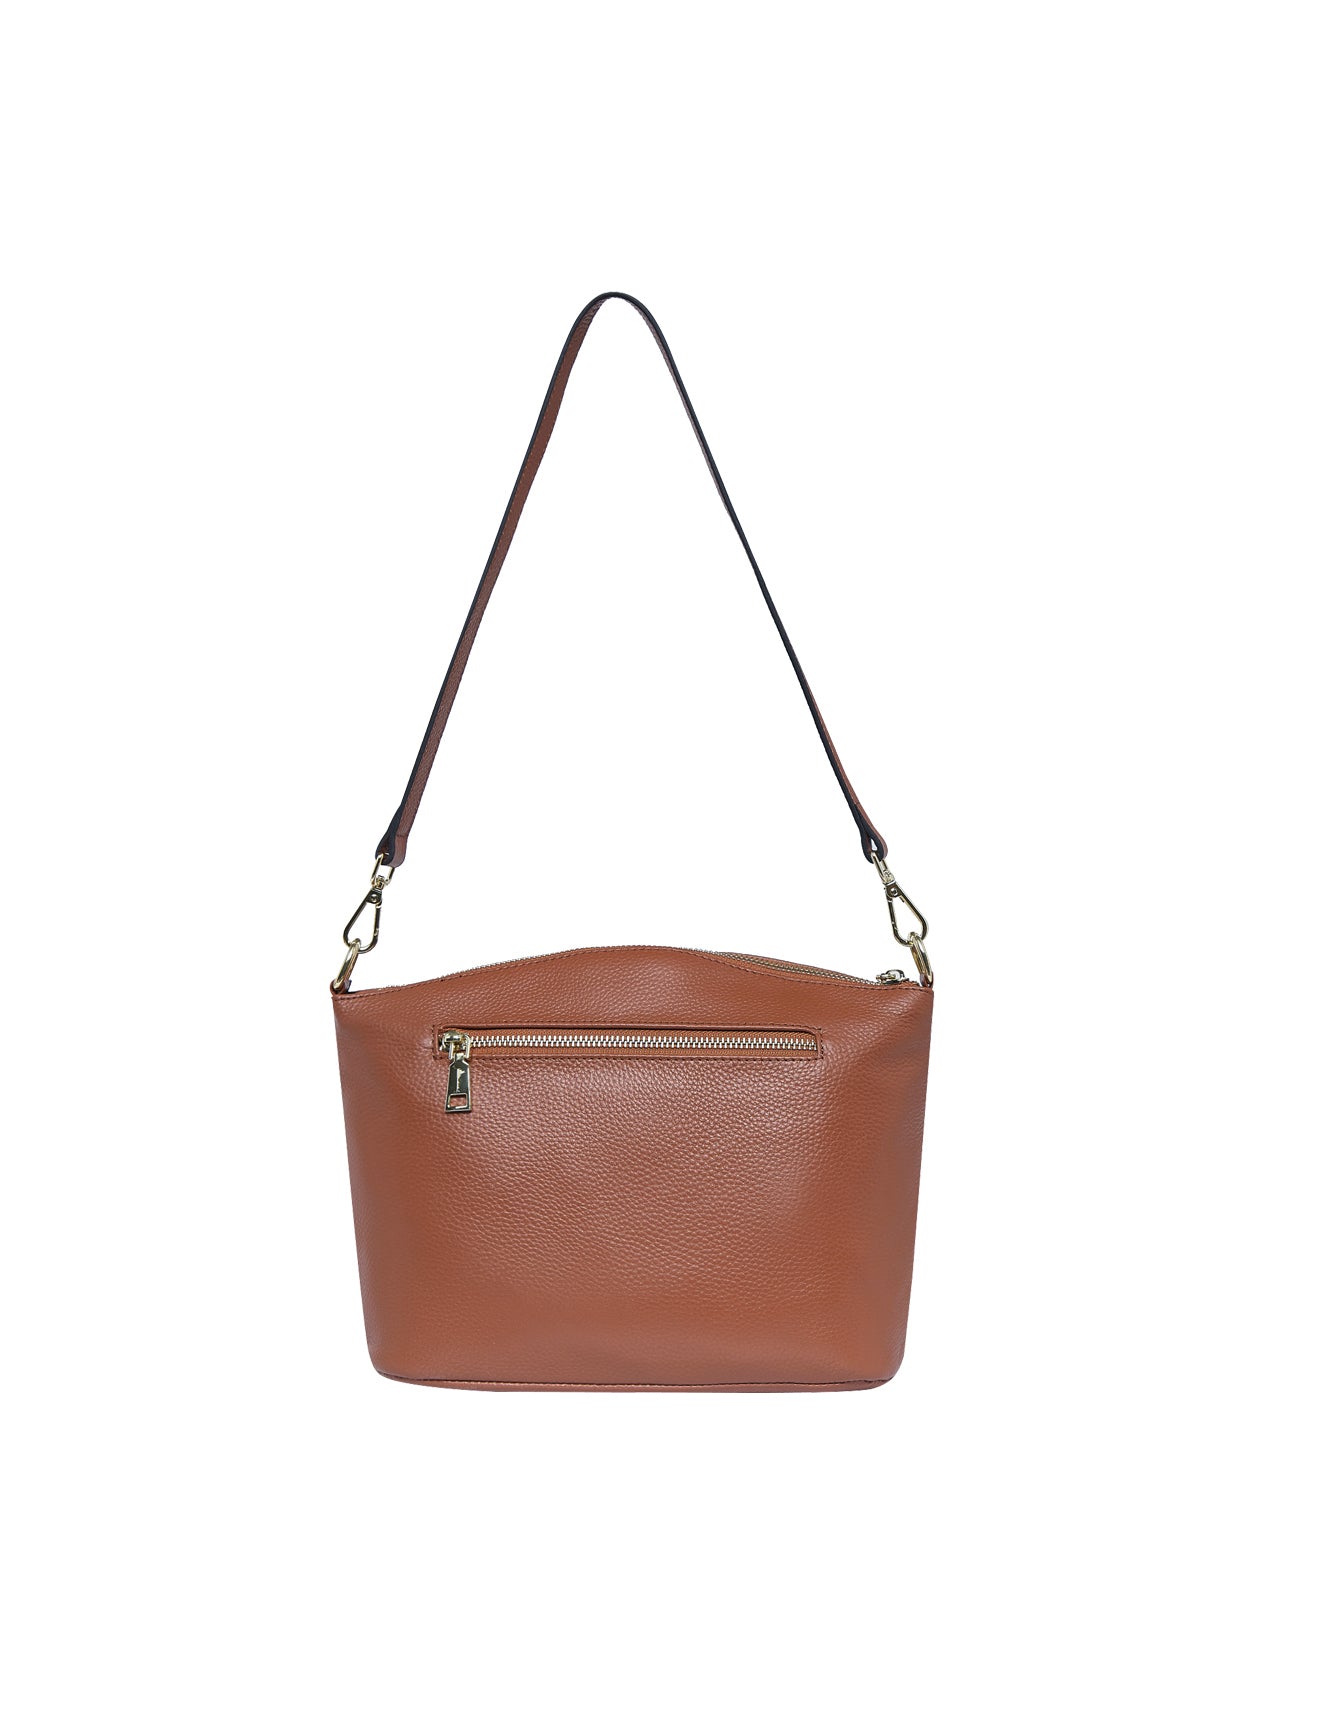 Elegant Tan Leather Handbag